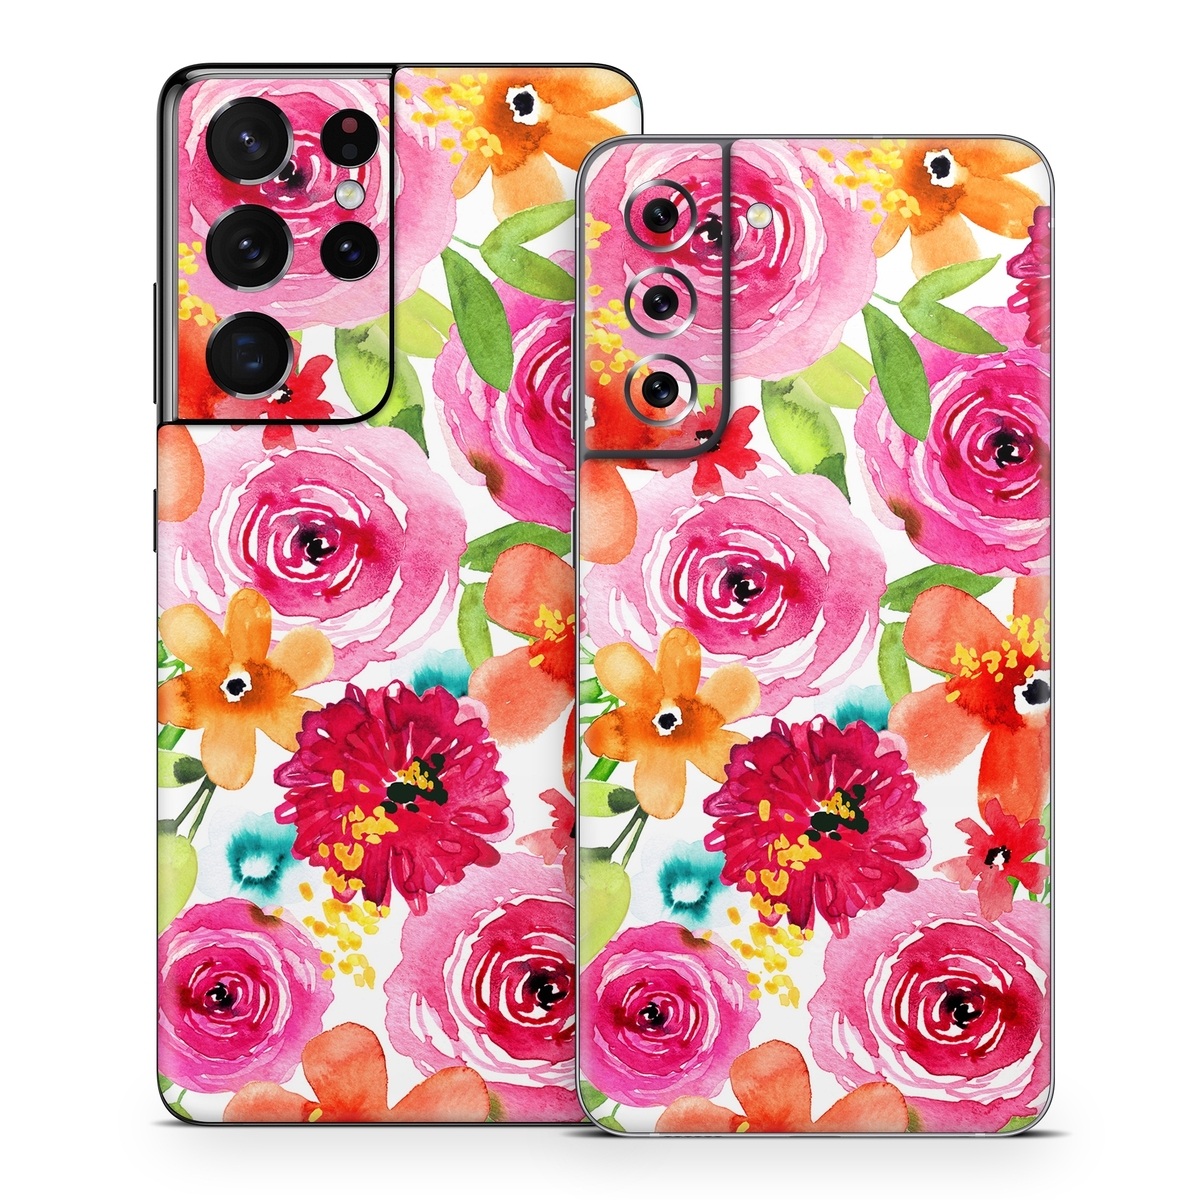 Samsung Galaxy S21 Skin - Floral Pop (Image 1)